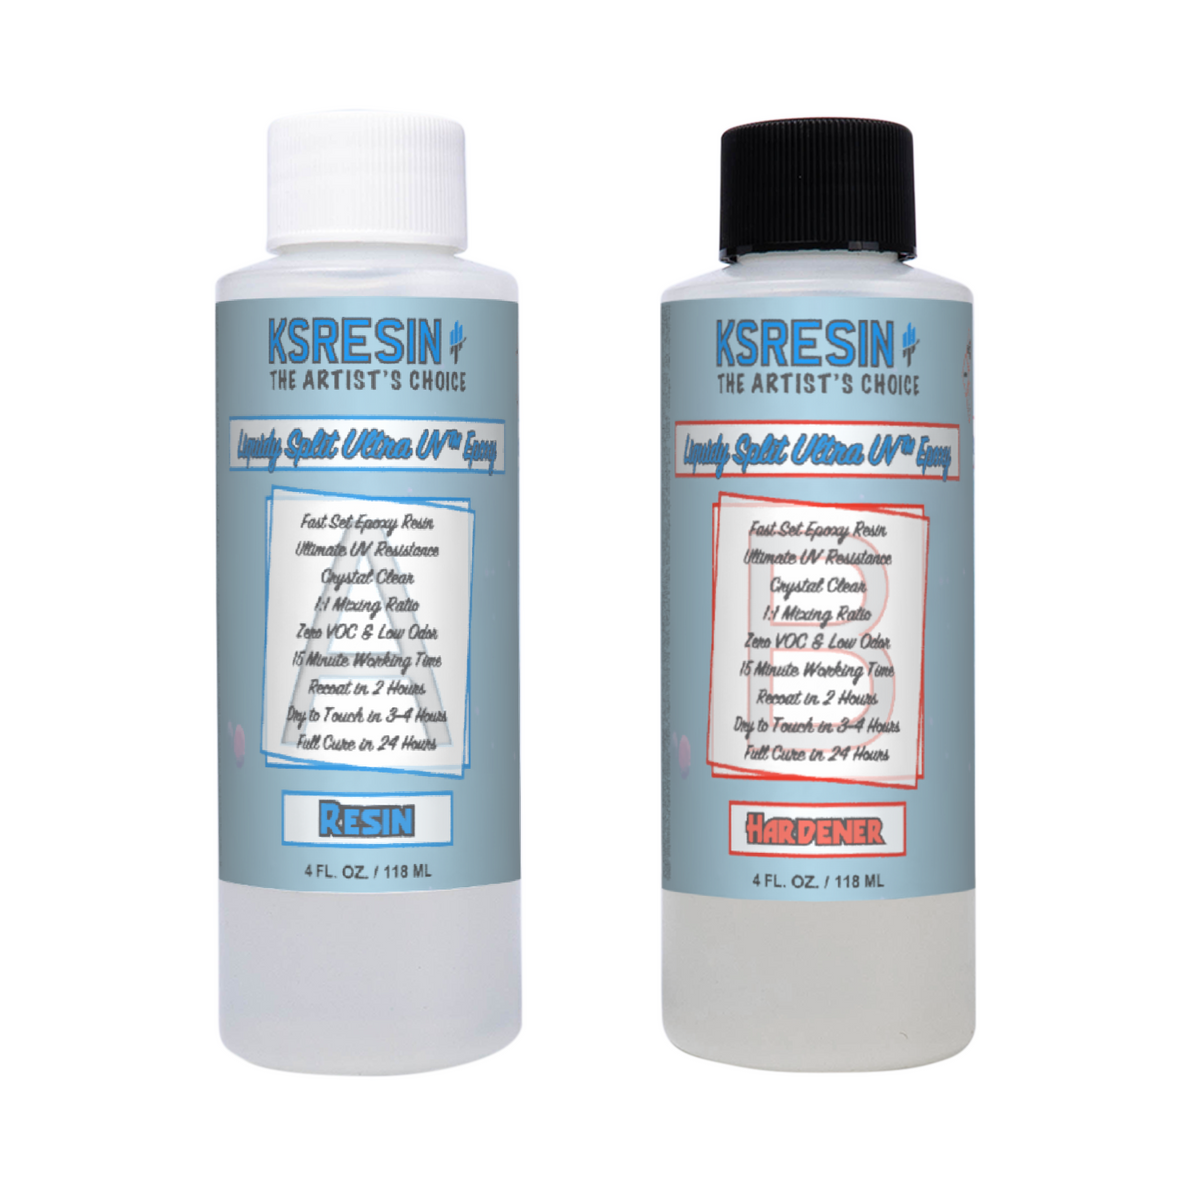 🔑 Saving the day with Let's Resin UV Resin Bonding Kit! 💡 Fixed